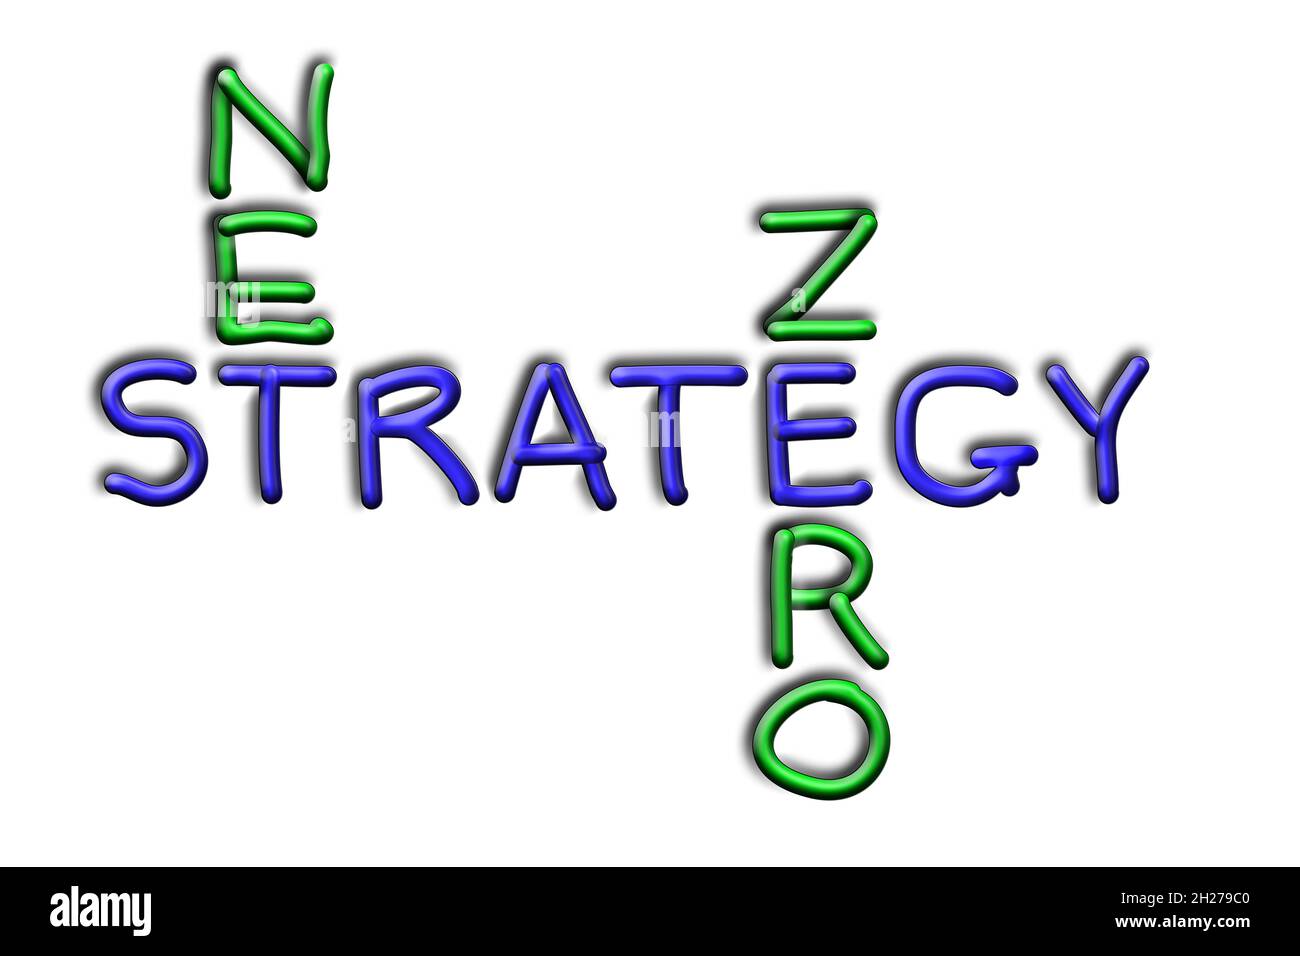 Net, Zero, Strategy, words in crossword form in blue and green handwritten letters, 3D illustration Stock Photo